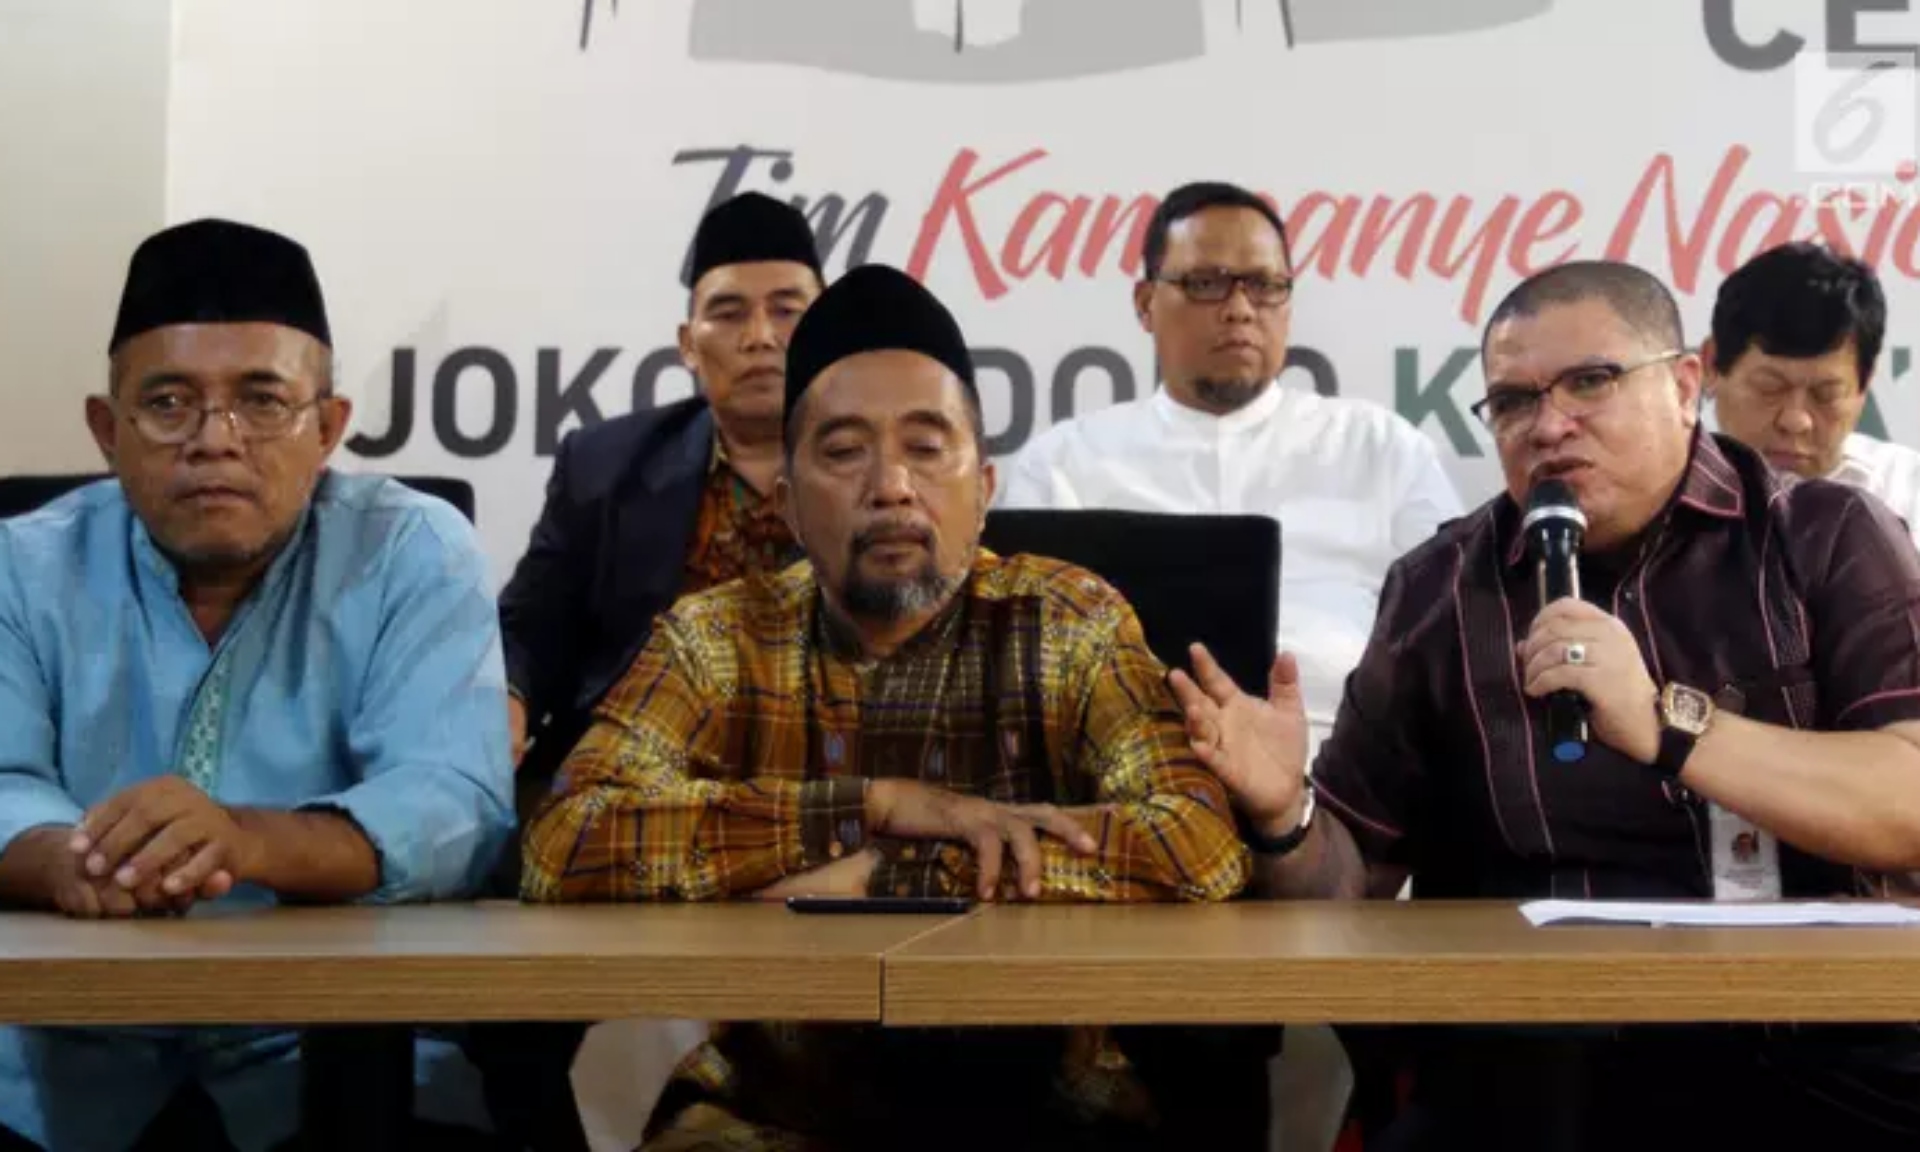 Dukung Jokowi-Ma'ruf Amin, Eks Aktivis 212: Tak Perlu Izin Rizieq Shihab